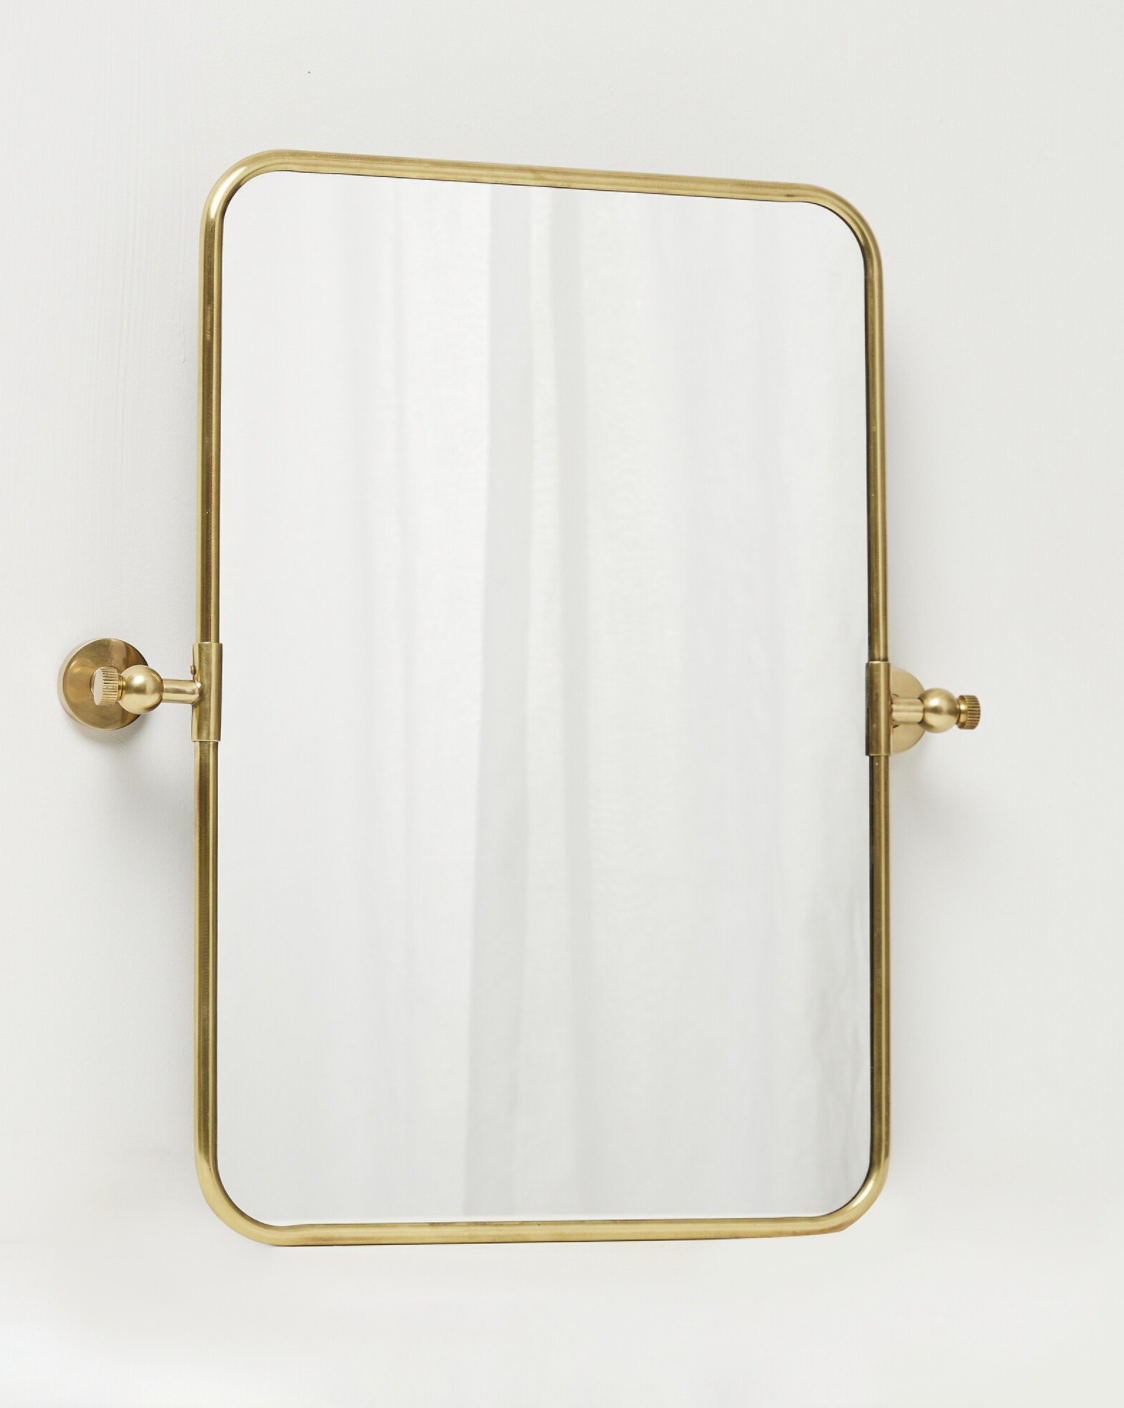 Oliver Bonas Rectangular Gold Tilting Wall Mirror Small